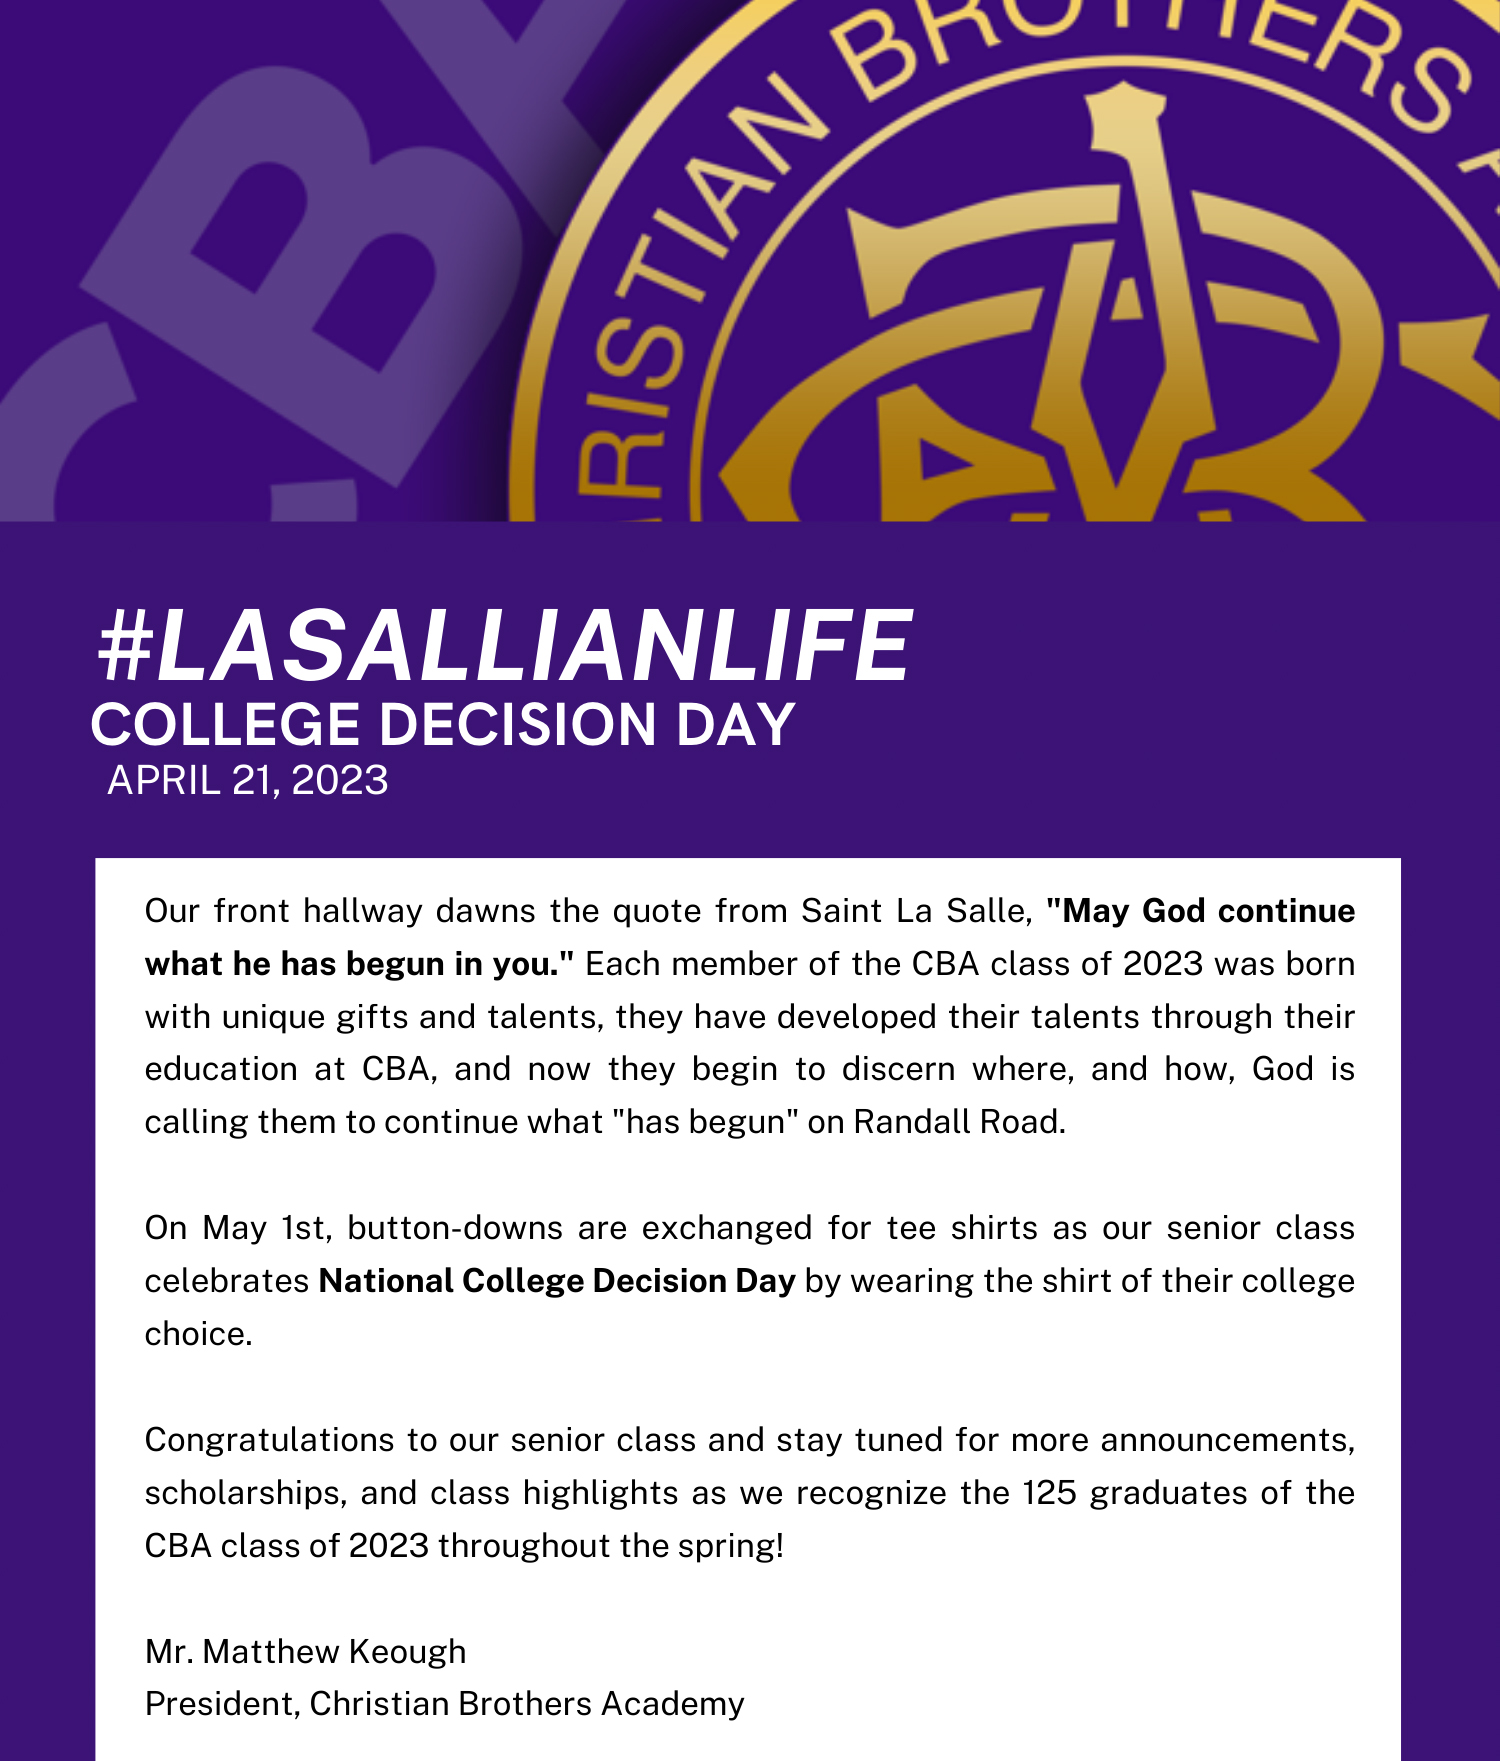 #LasallianLife : College Decision Day 2023